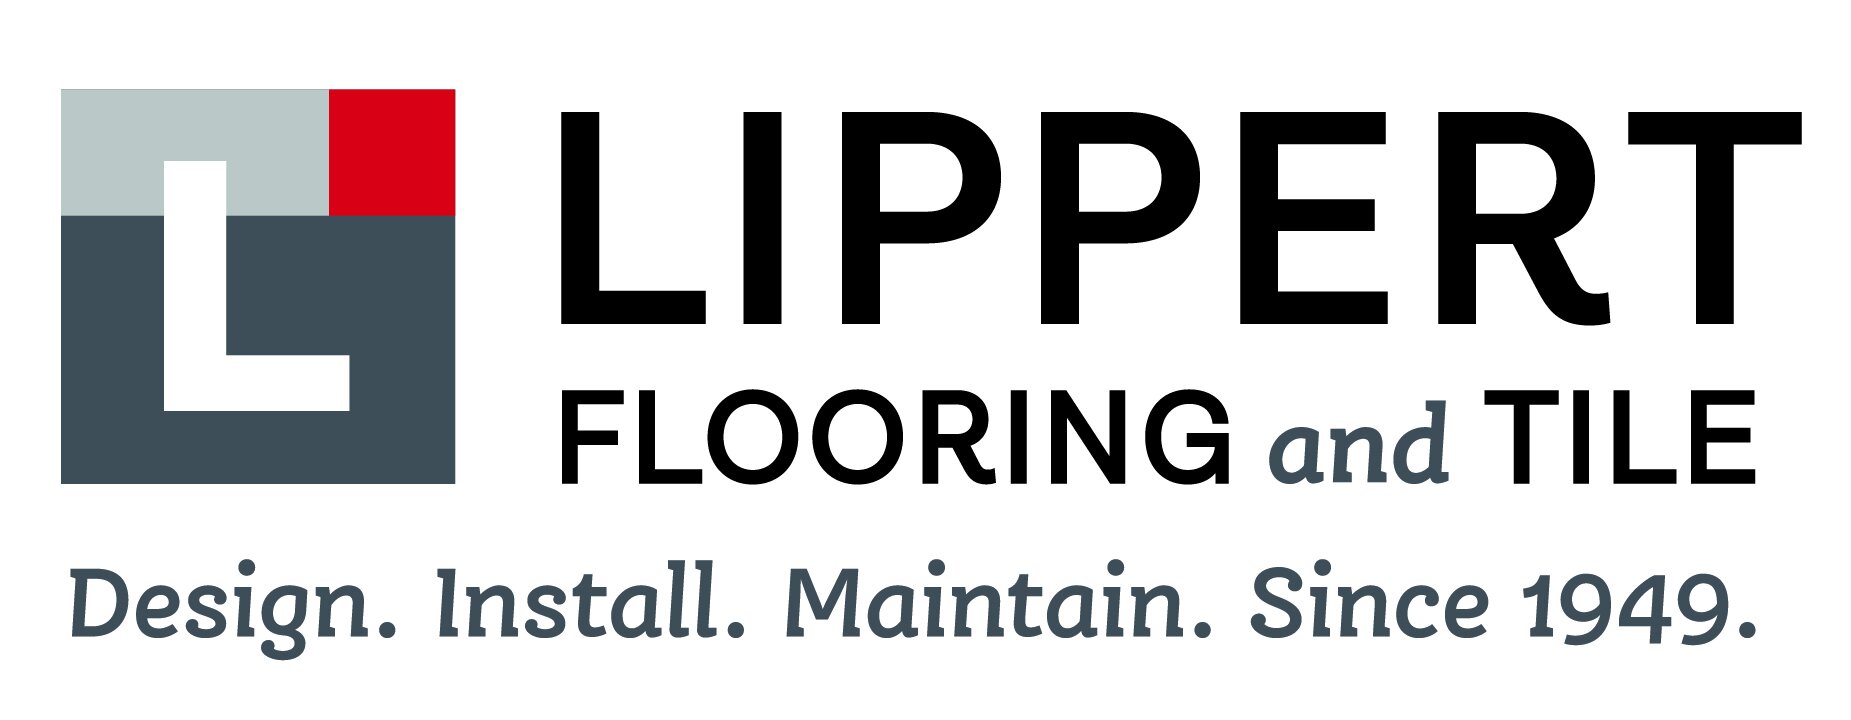 Lippert logo.jpg